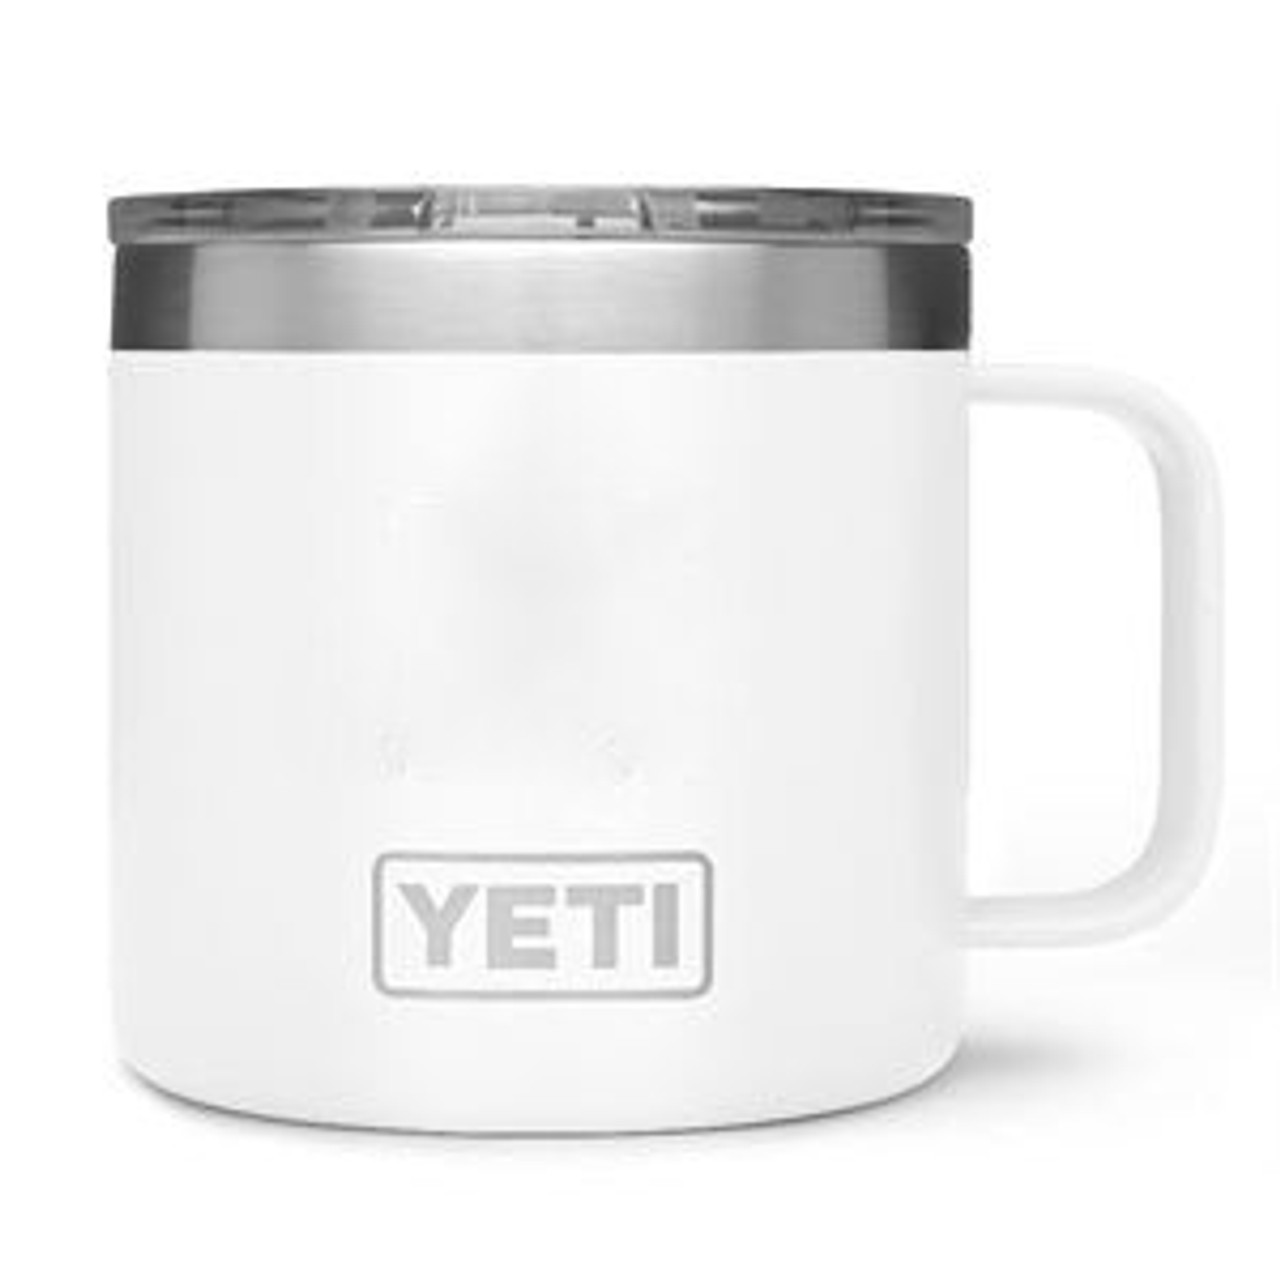 Yeti Rambler 24 oz Mug with Standard Lid Reviews 2024